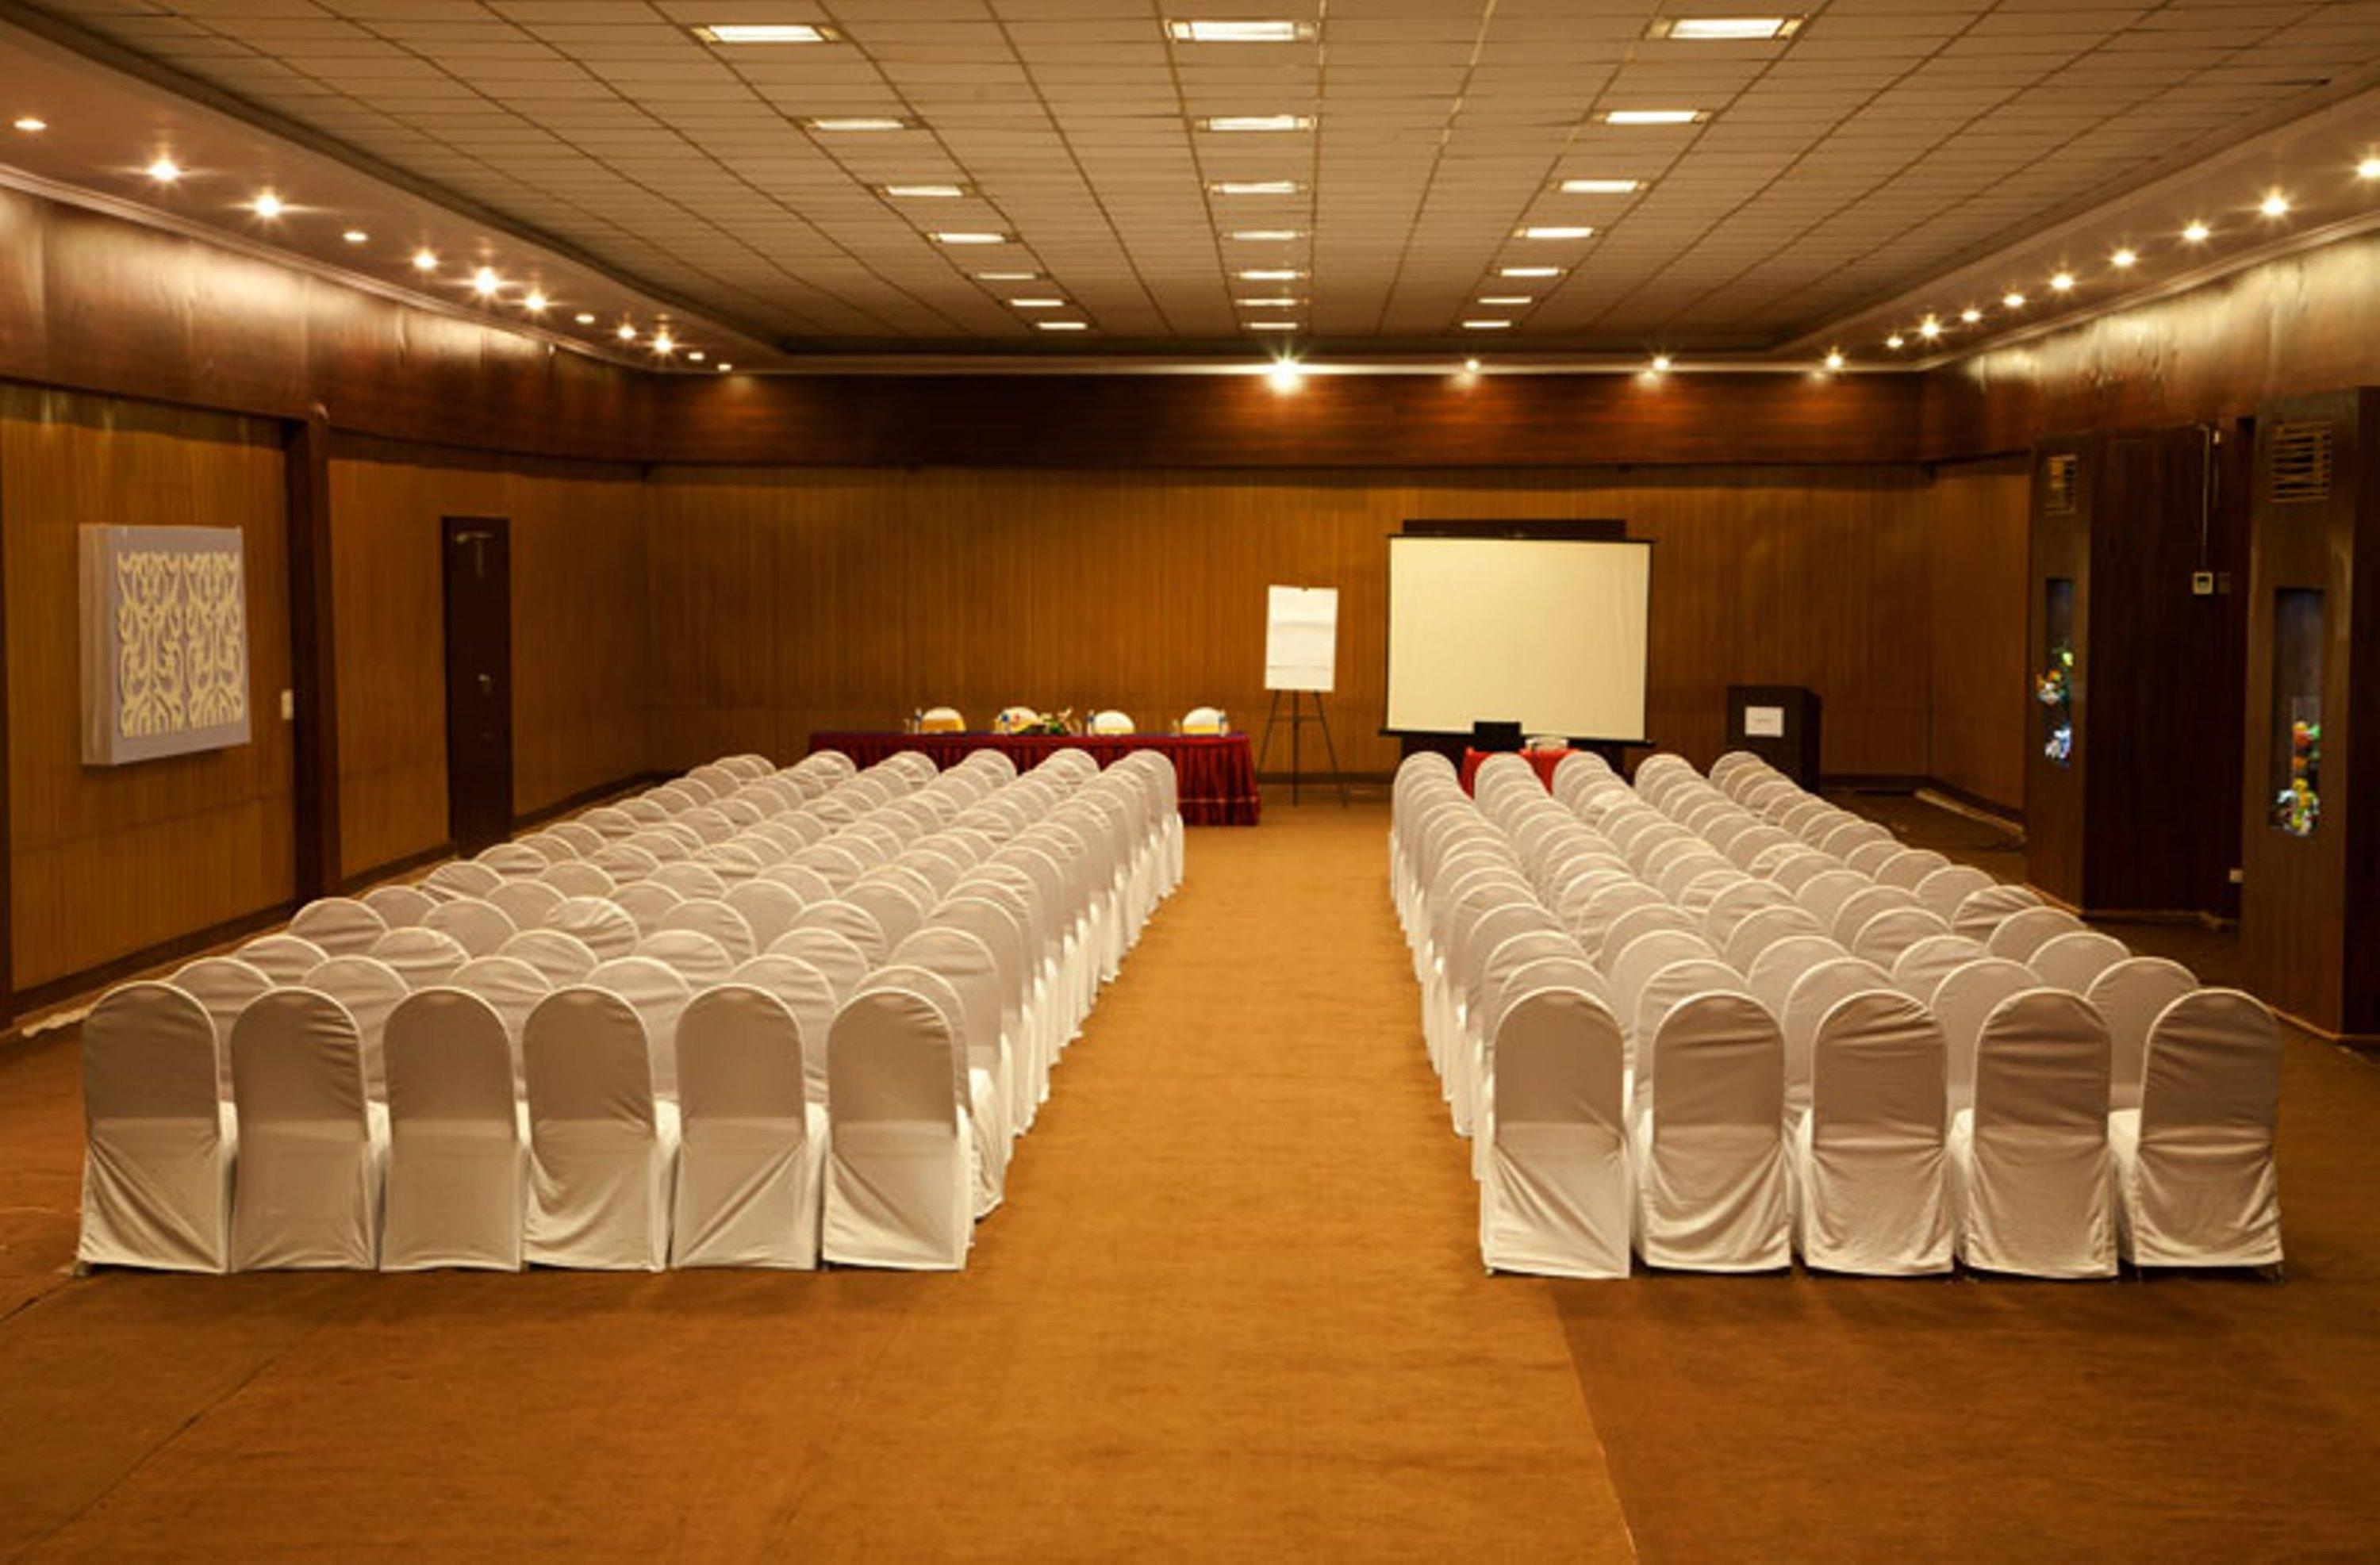 Royal Orchid Resort & Convention Centre, Yelahanka Bangalore Exterior photo